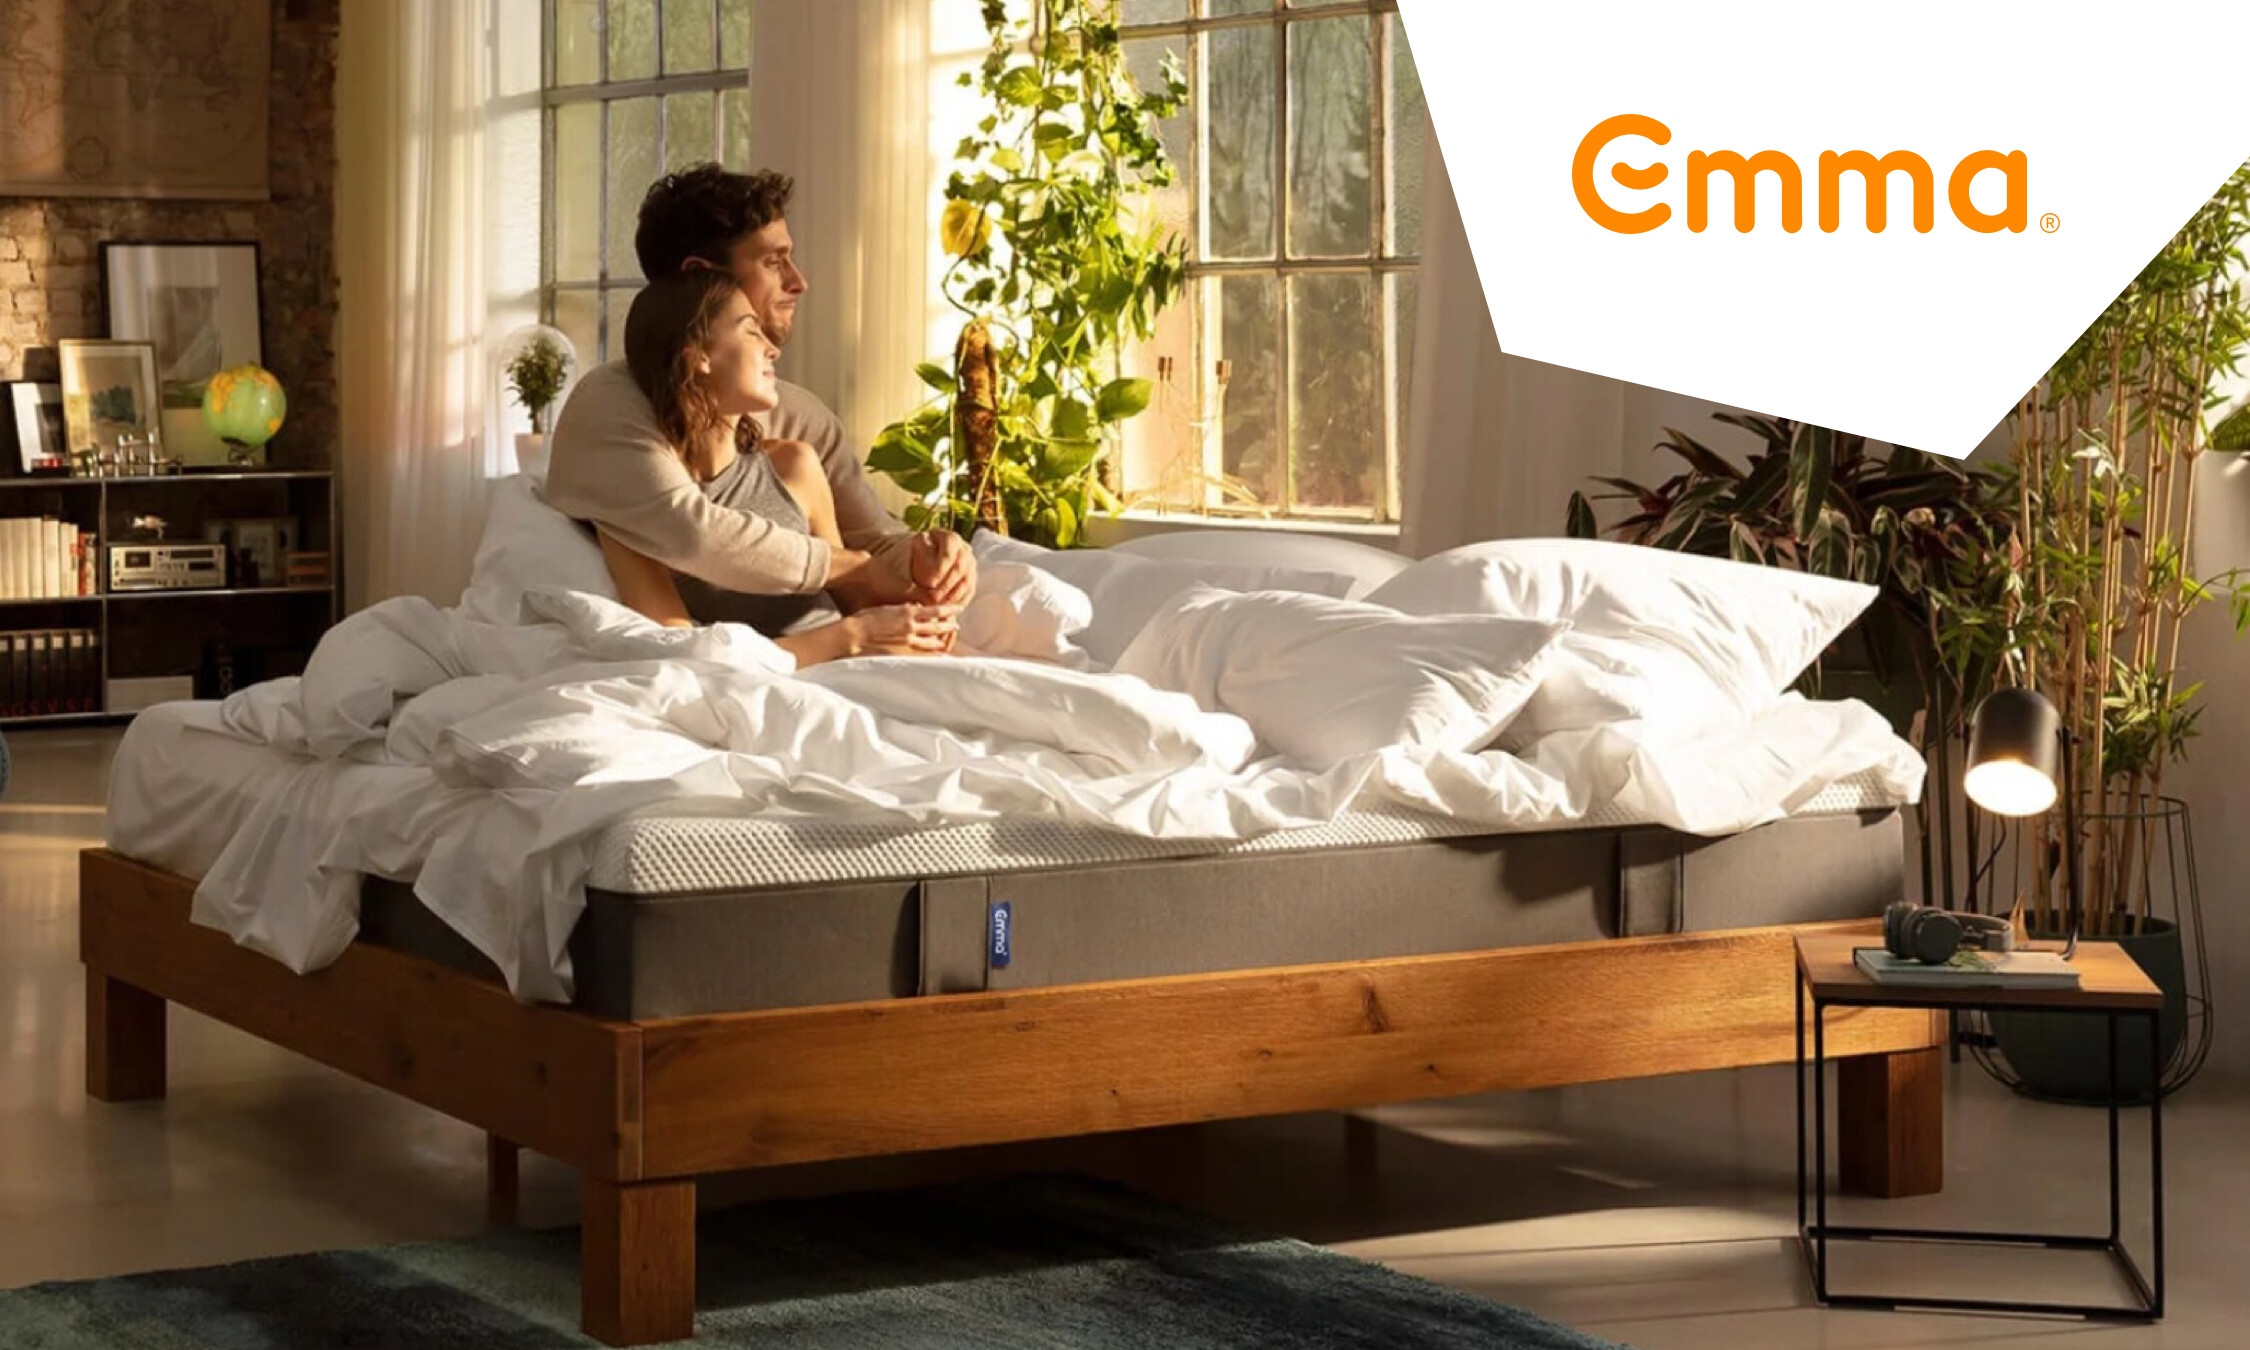 Emma The Sleep Company chose commercetools for their new eCommerce platform